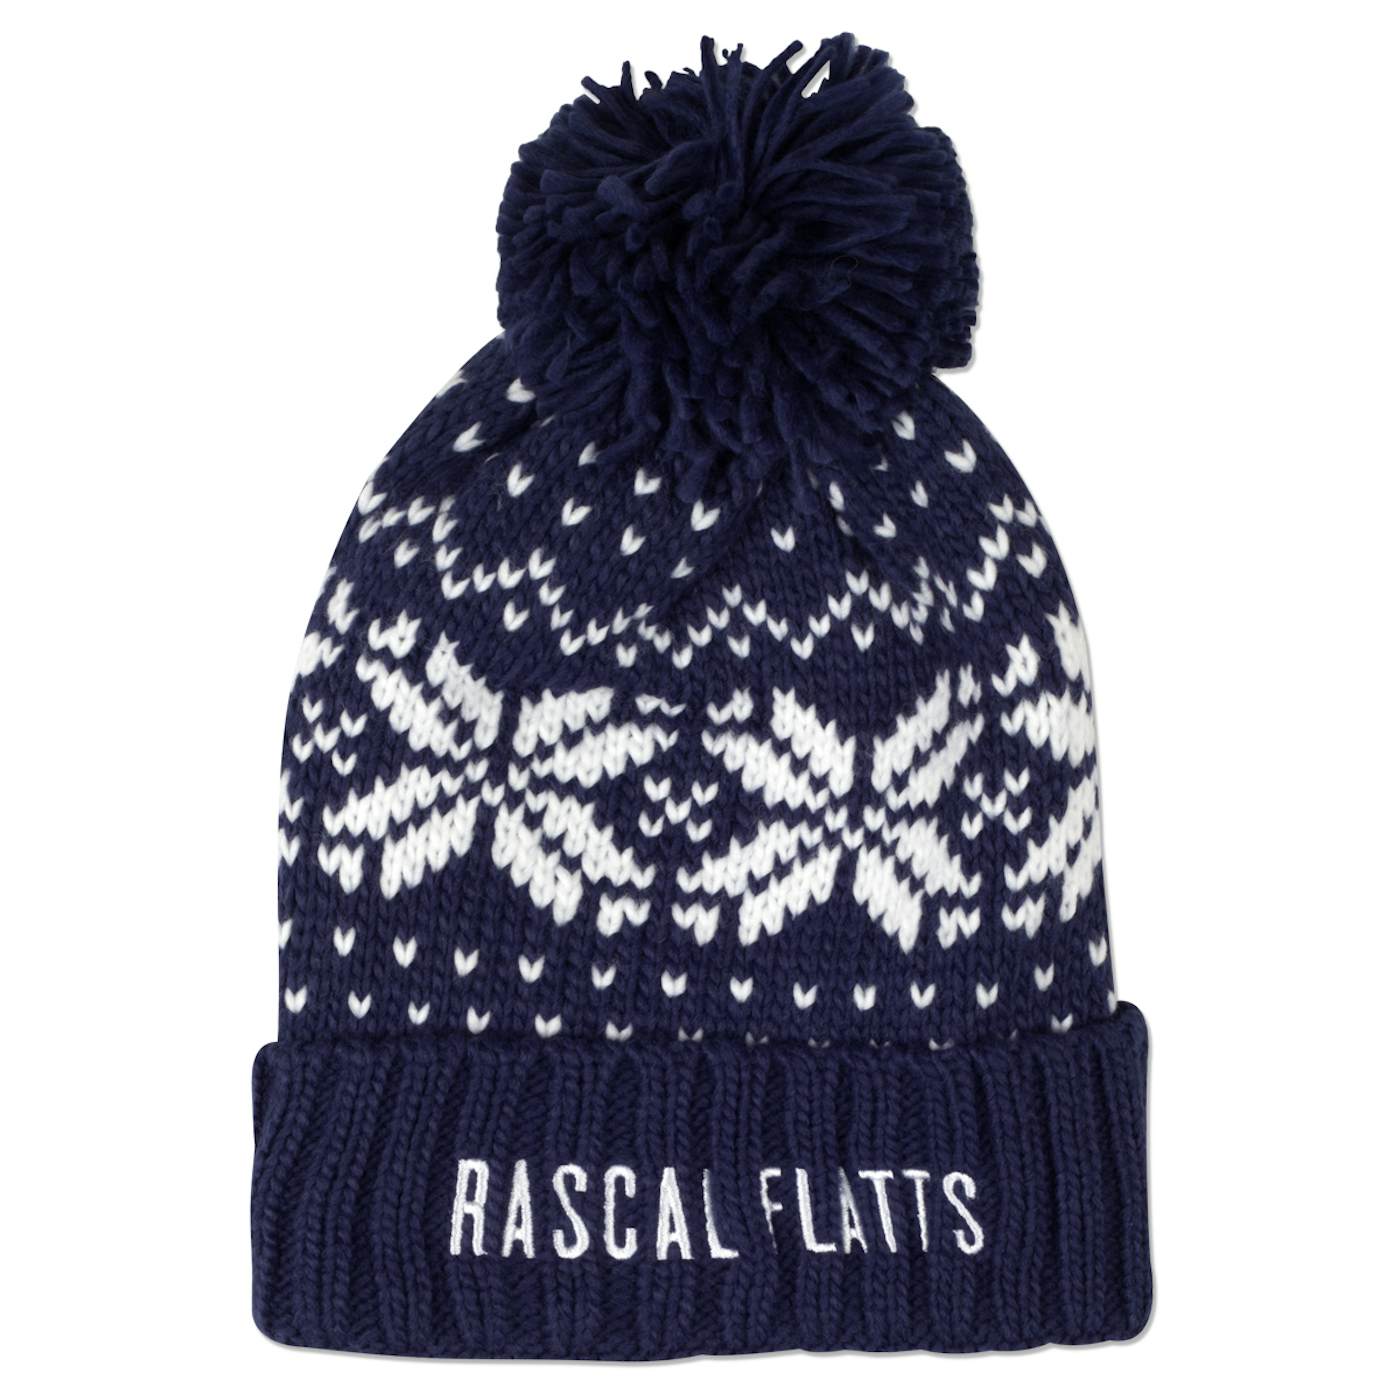 Rascal Flatts holiday knit beanie